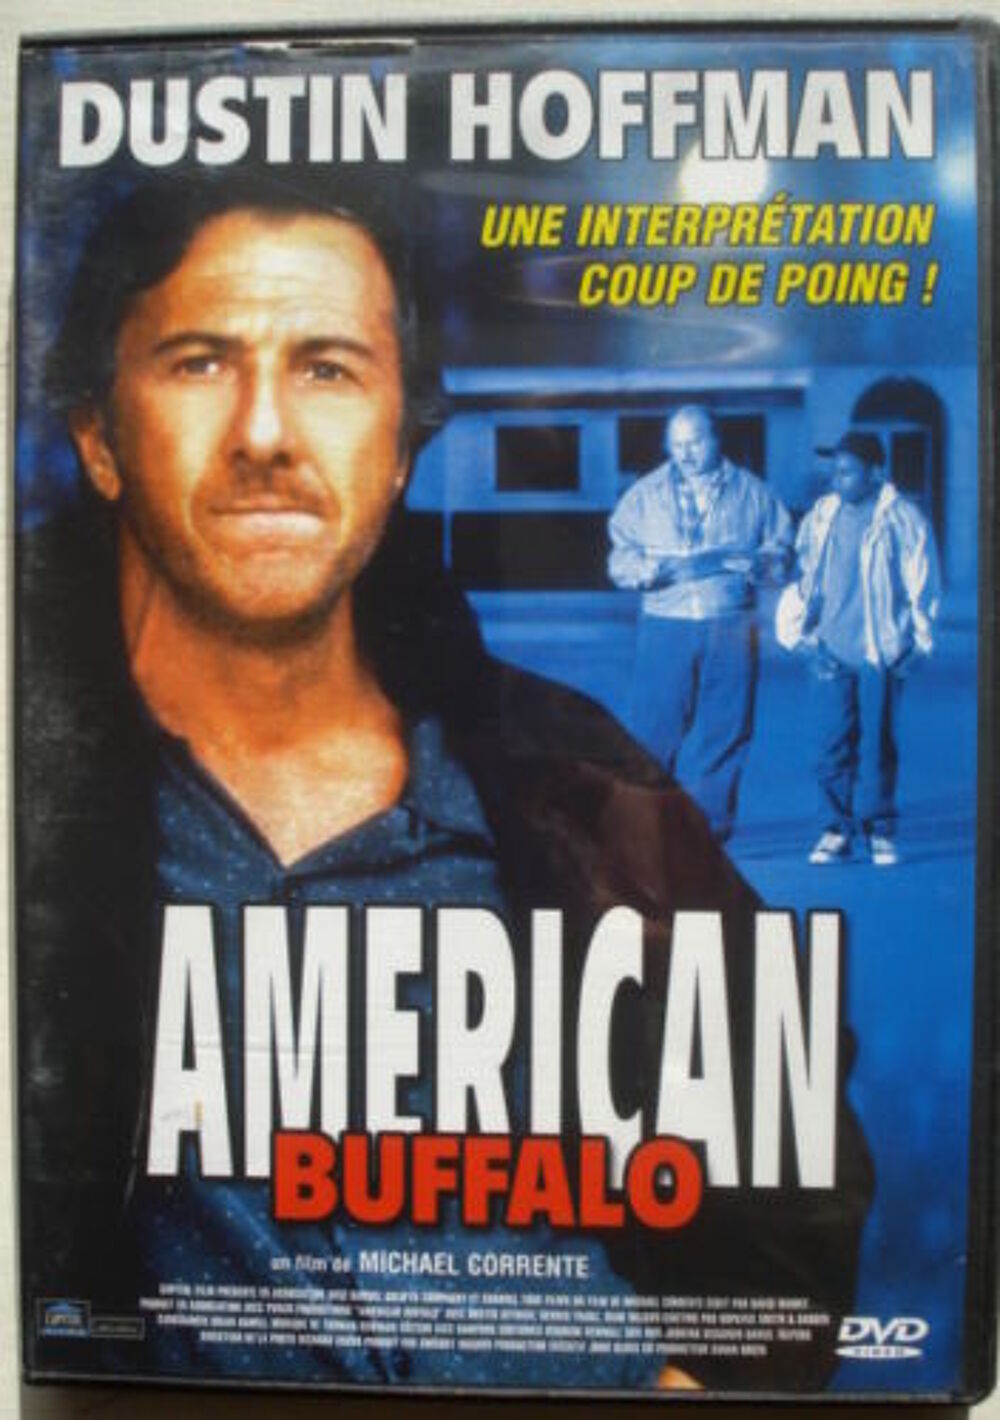 DVD AMERICAN BUFFALO ///// DVD et blu-ray